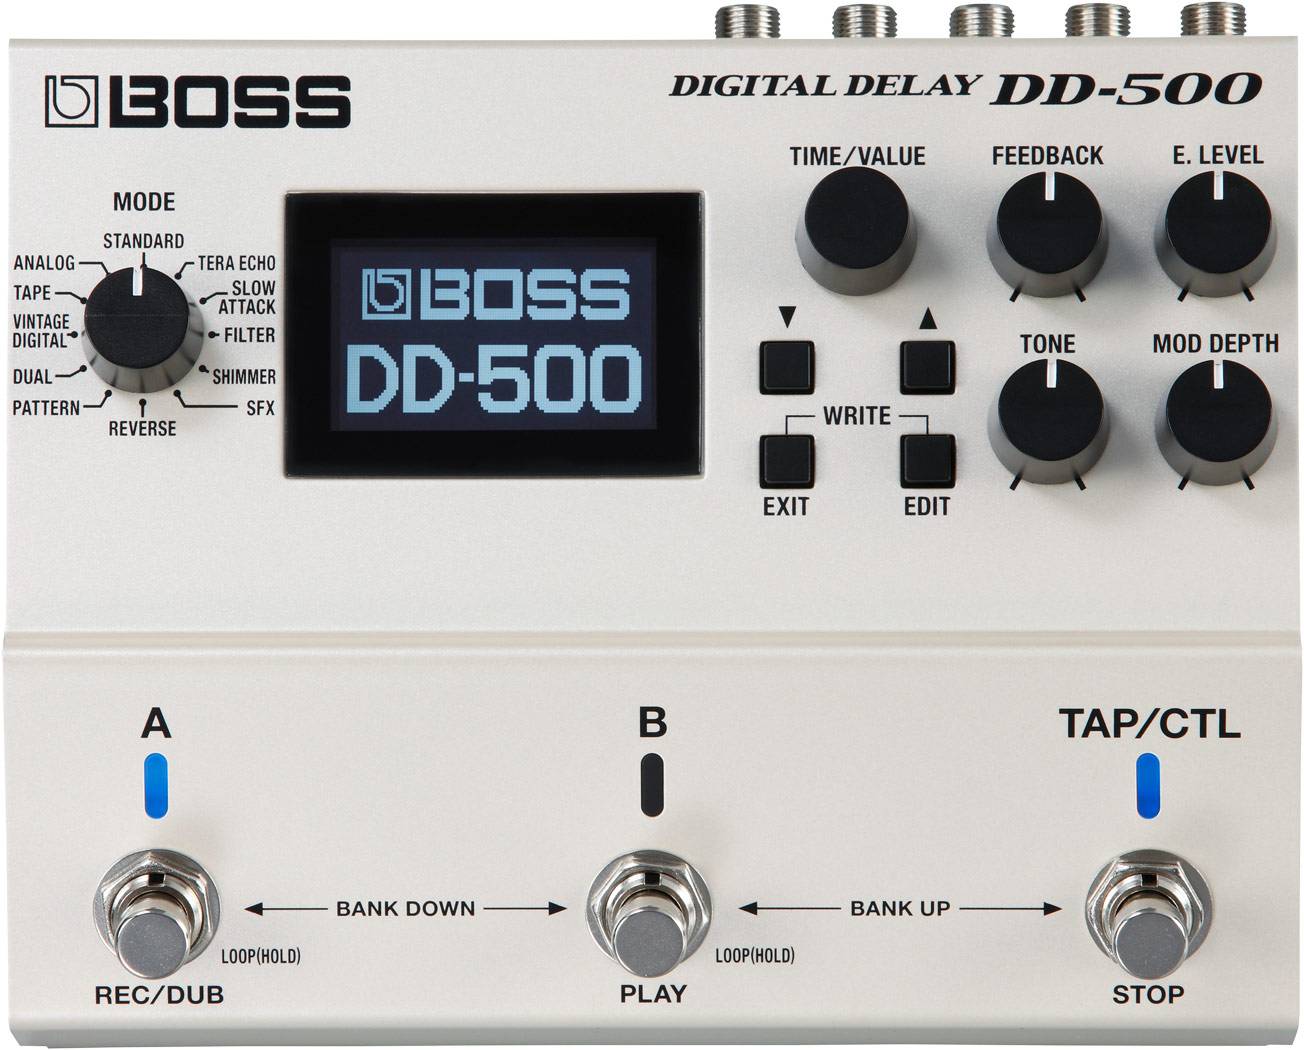 BOSS DD-500 Digital Delay Guitar PedalBoard